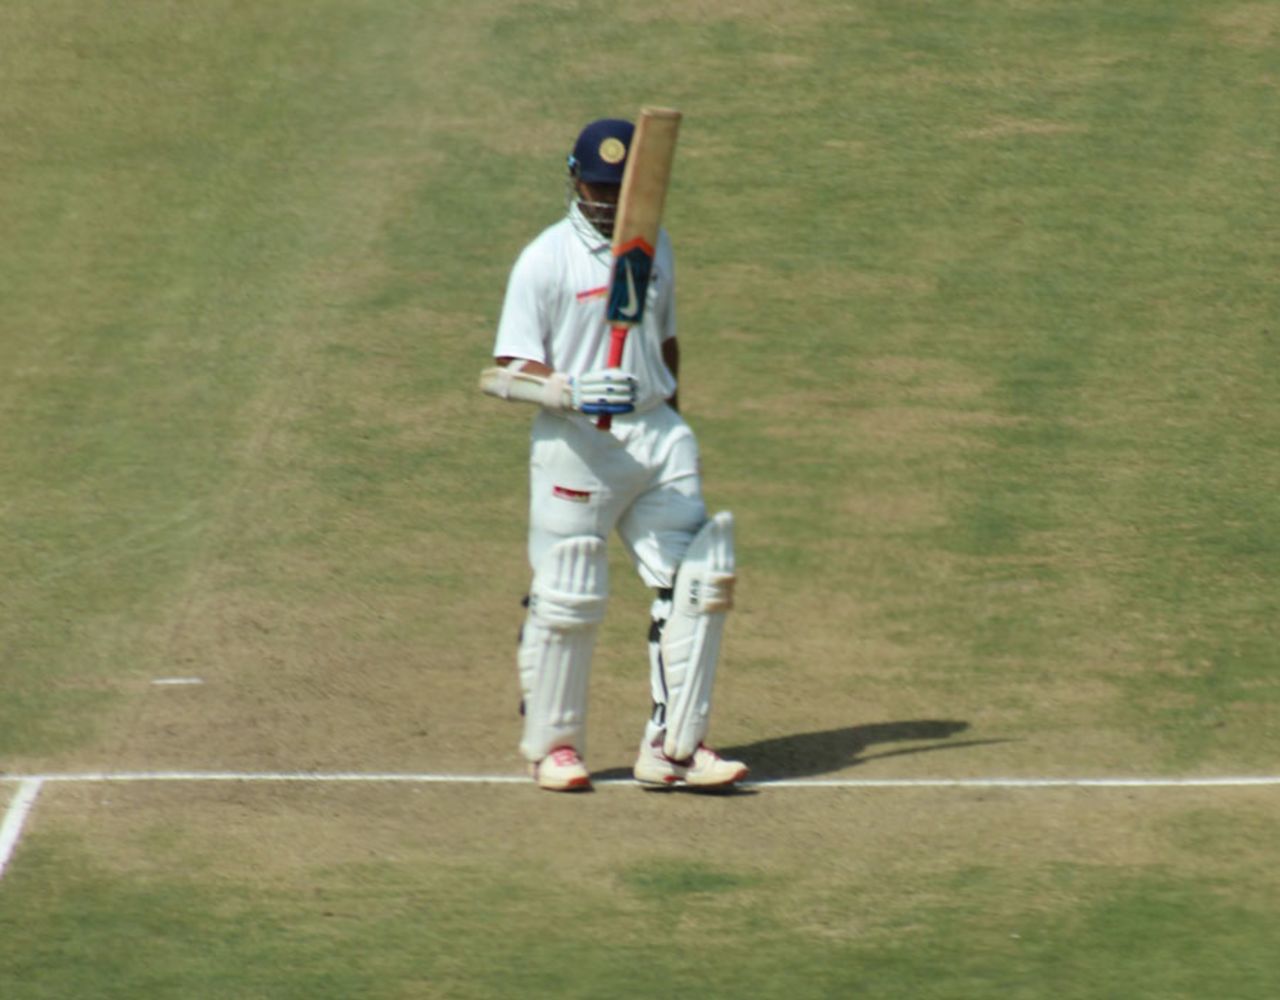 Parthiv Patel raises his bat after a half-century, Karnataka v Gujrat, Group A, Ranji Trophy, 2nd day, Bangalore, November 15, 2013